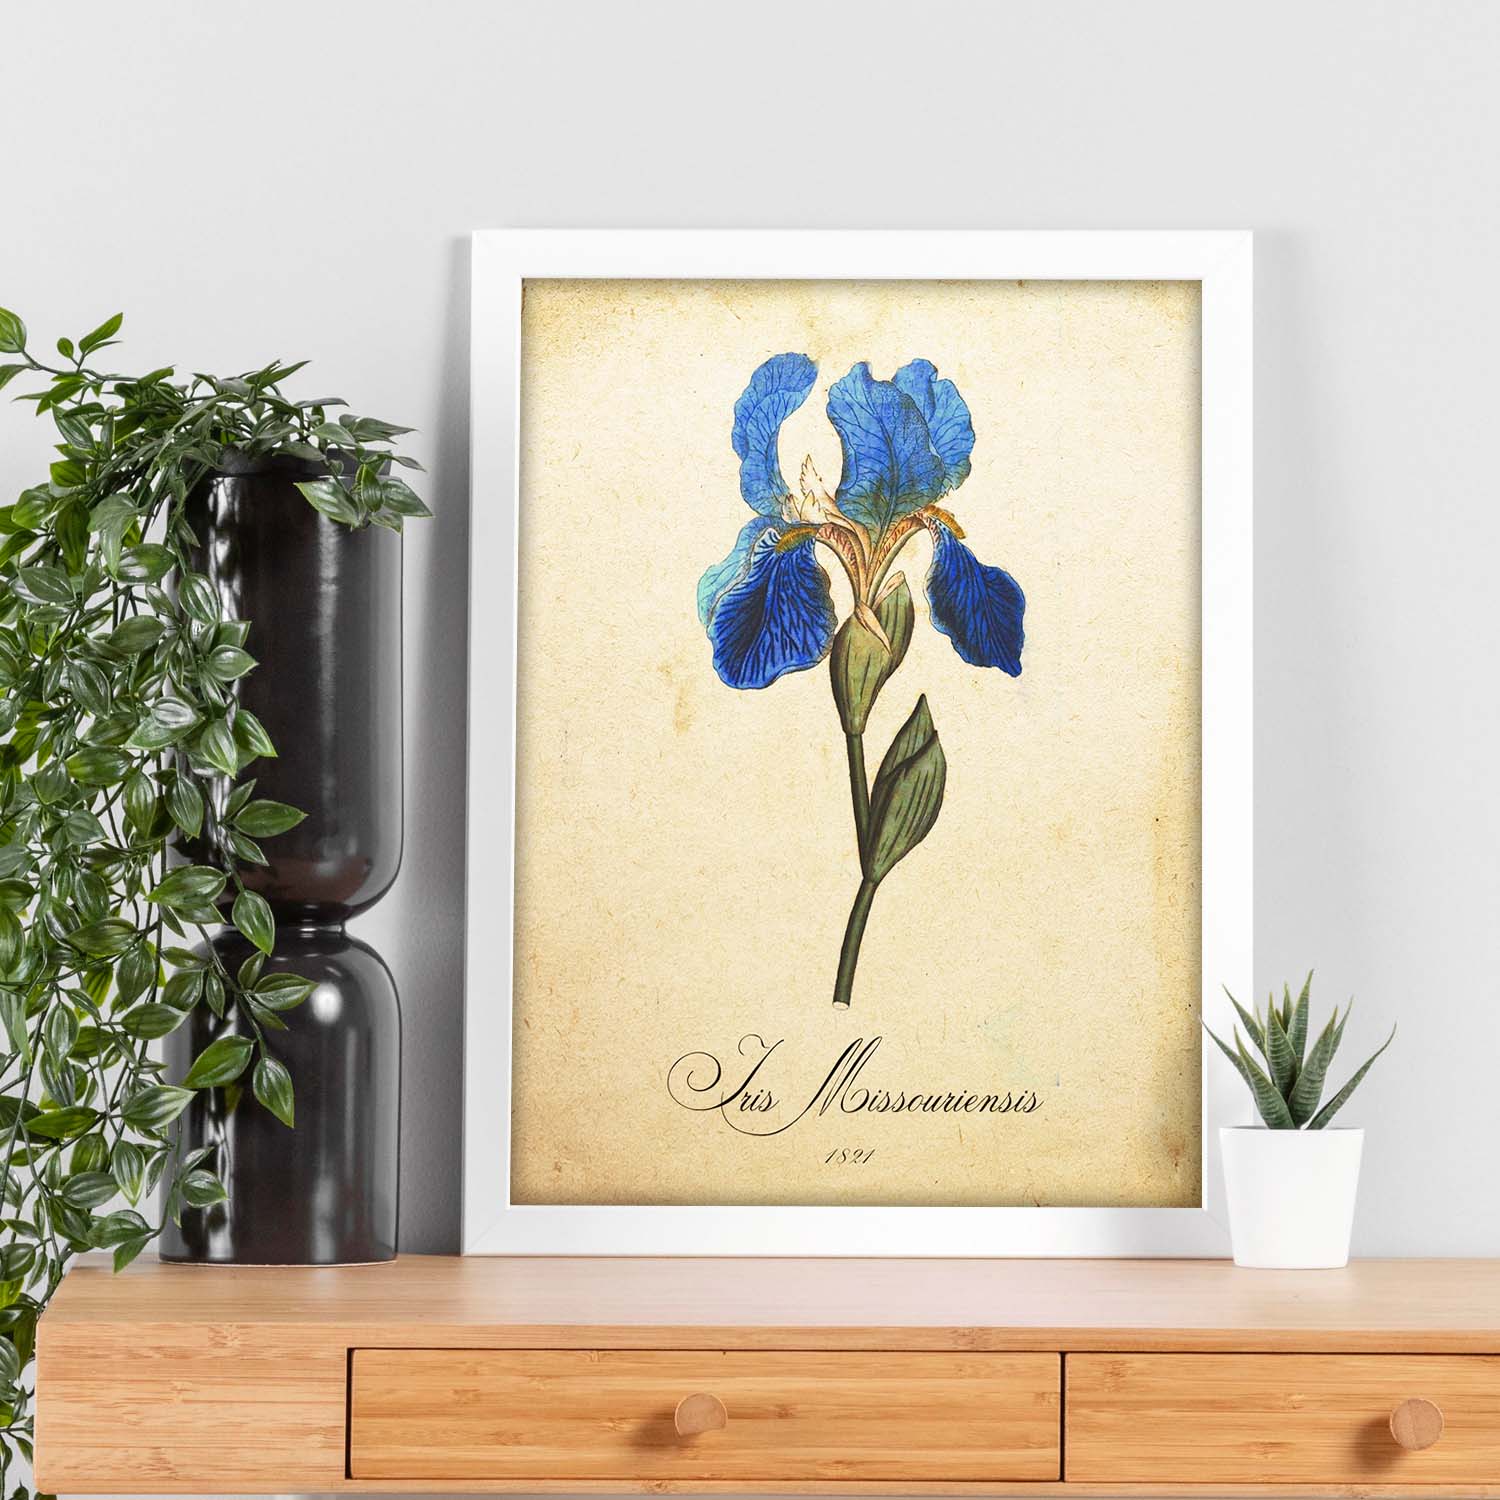 Poster de flores vintage. Lámina Iris missouriensis con diseño vintage.-Artwork-Nacnic-Nacnic Estudio SL